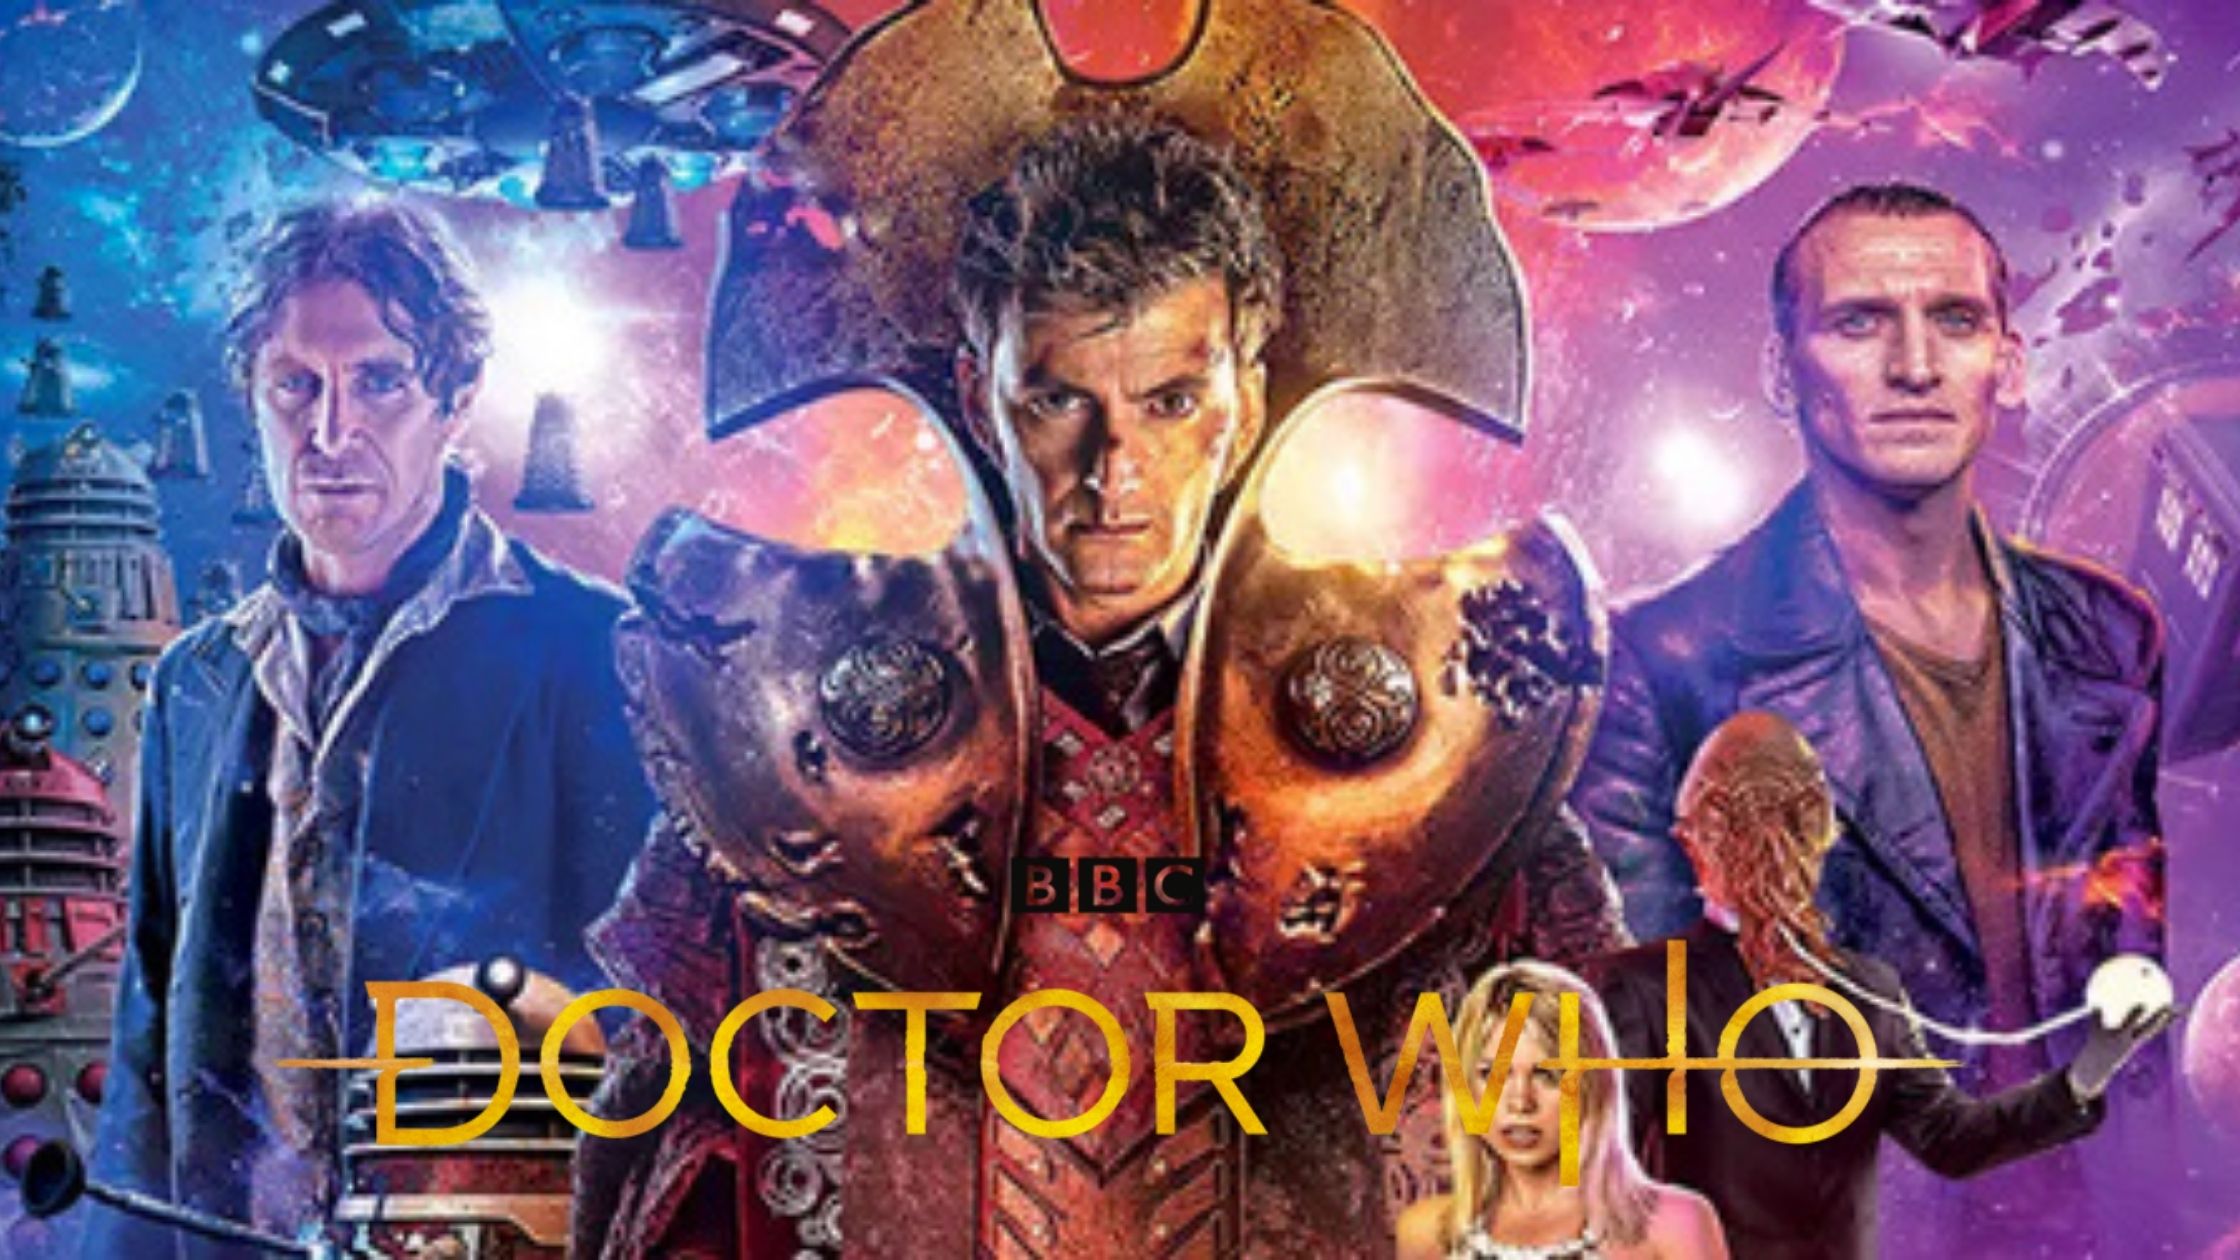 Watch Doctor Who on Netflix